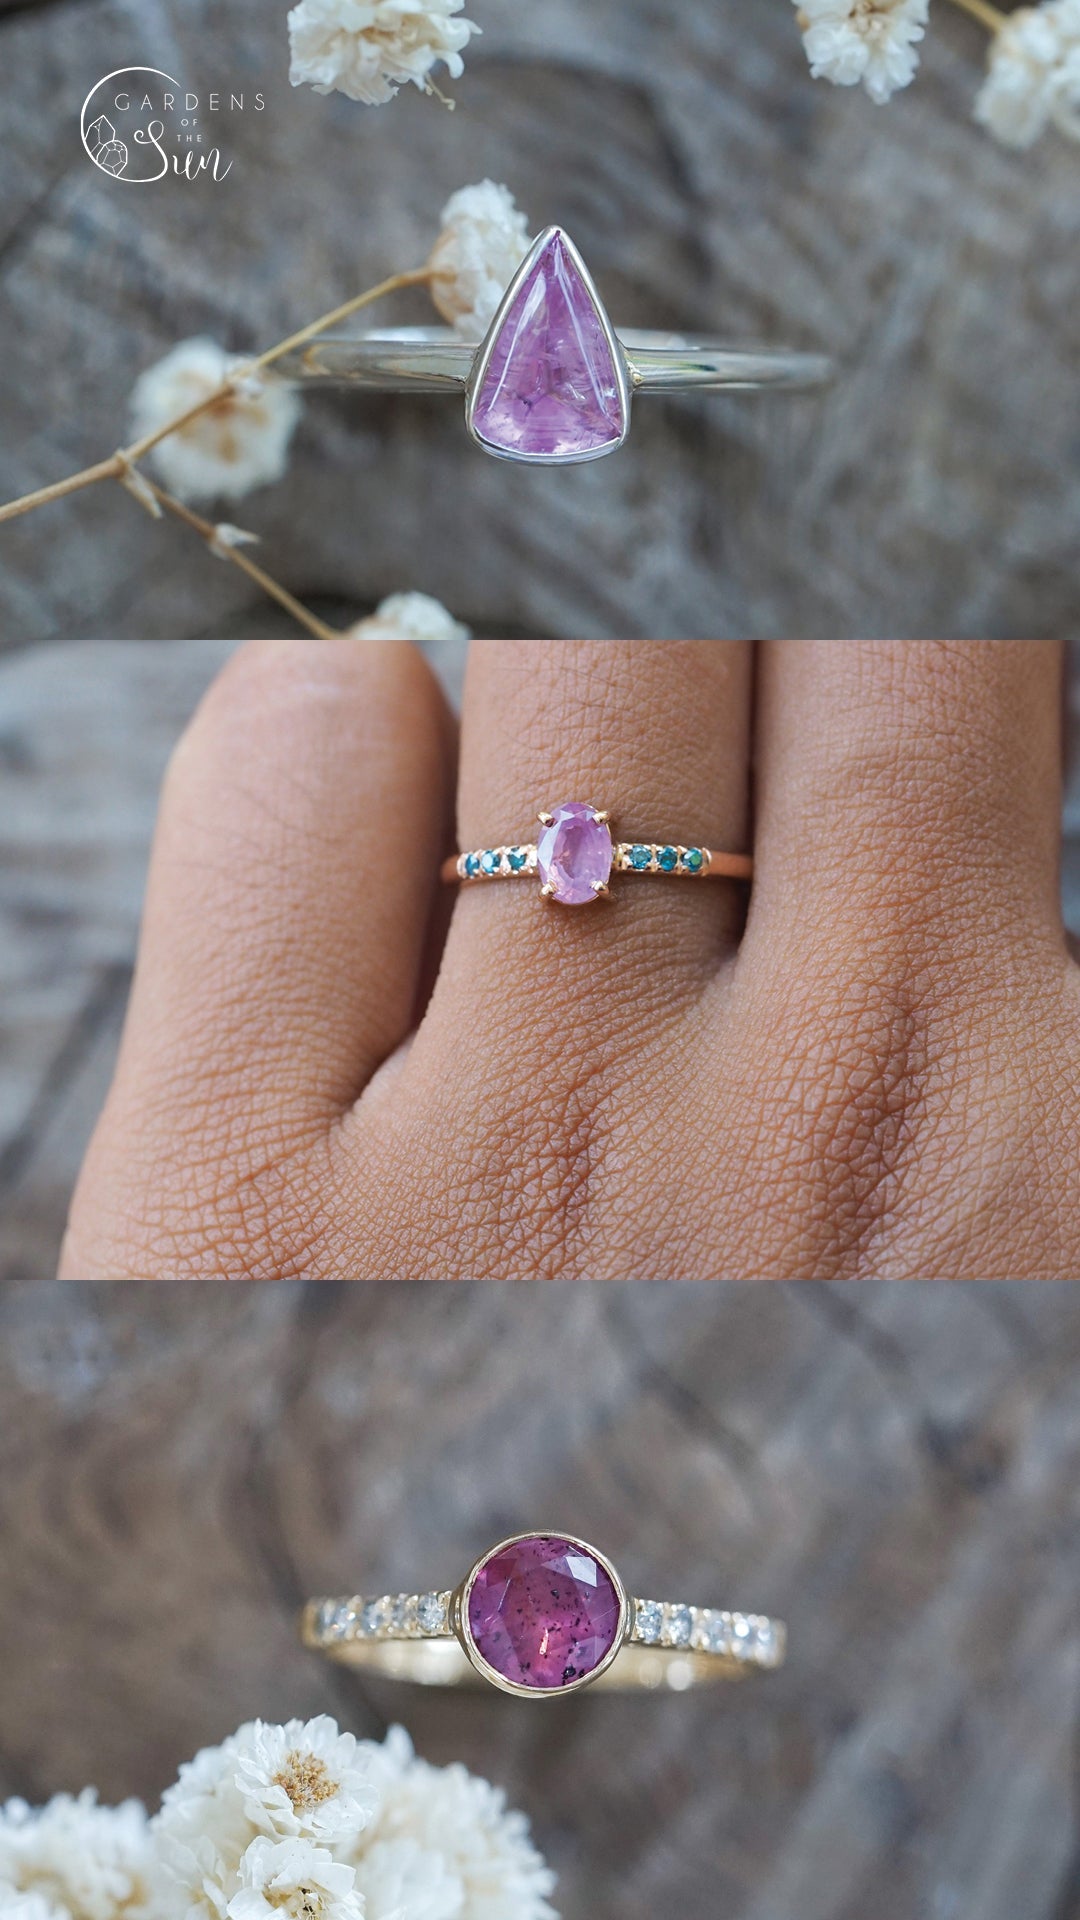 Pink Sapphire Two Row Gold Ring Sundar